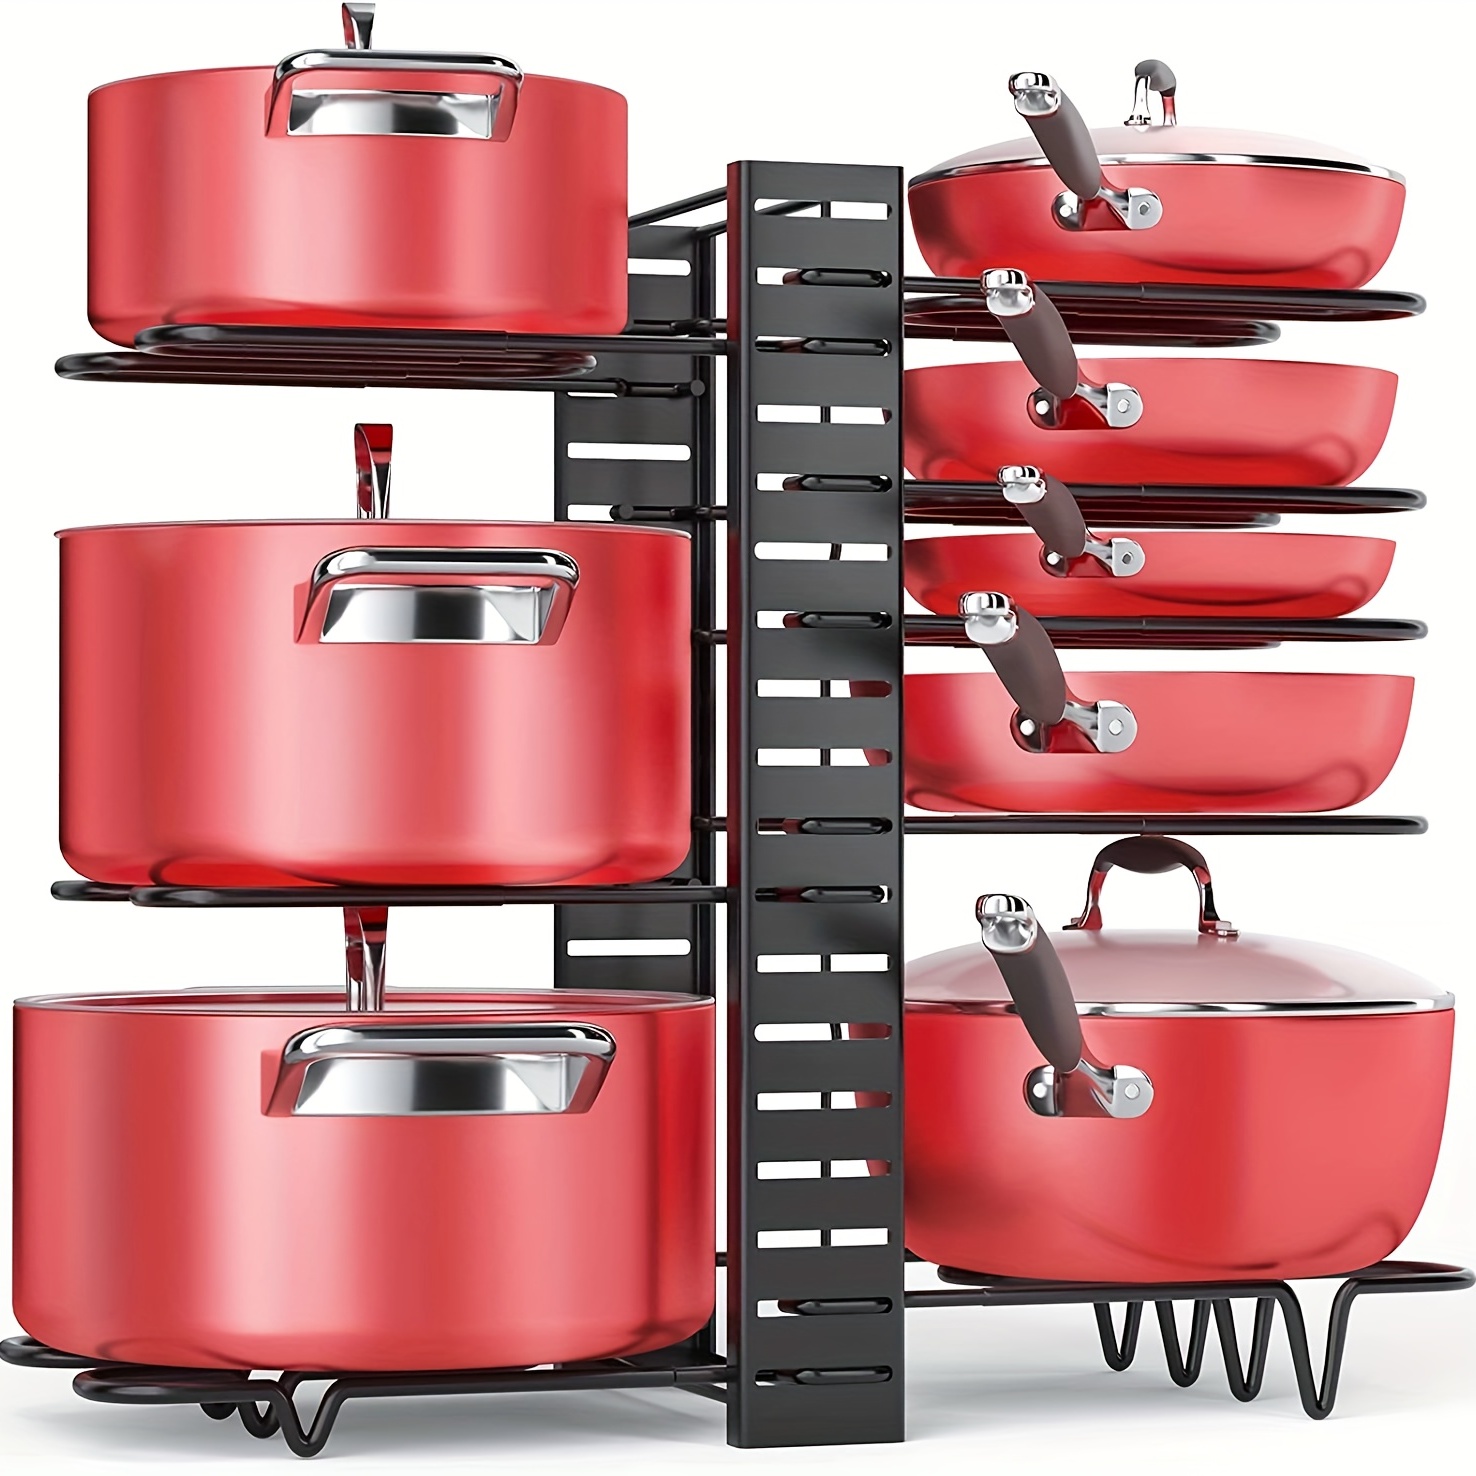 Organizador de almacenamiento de cocina con estante para ollas de 8 niveles